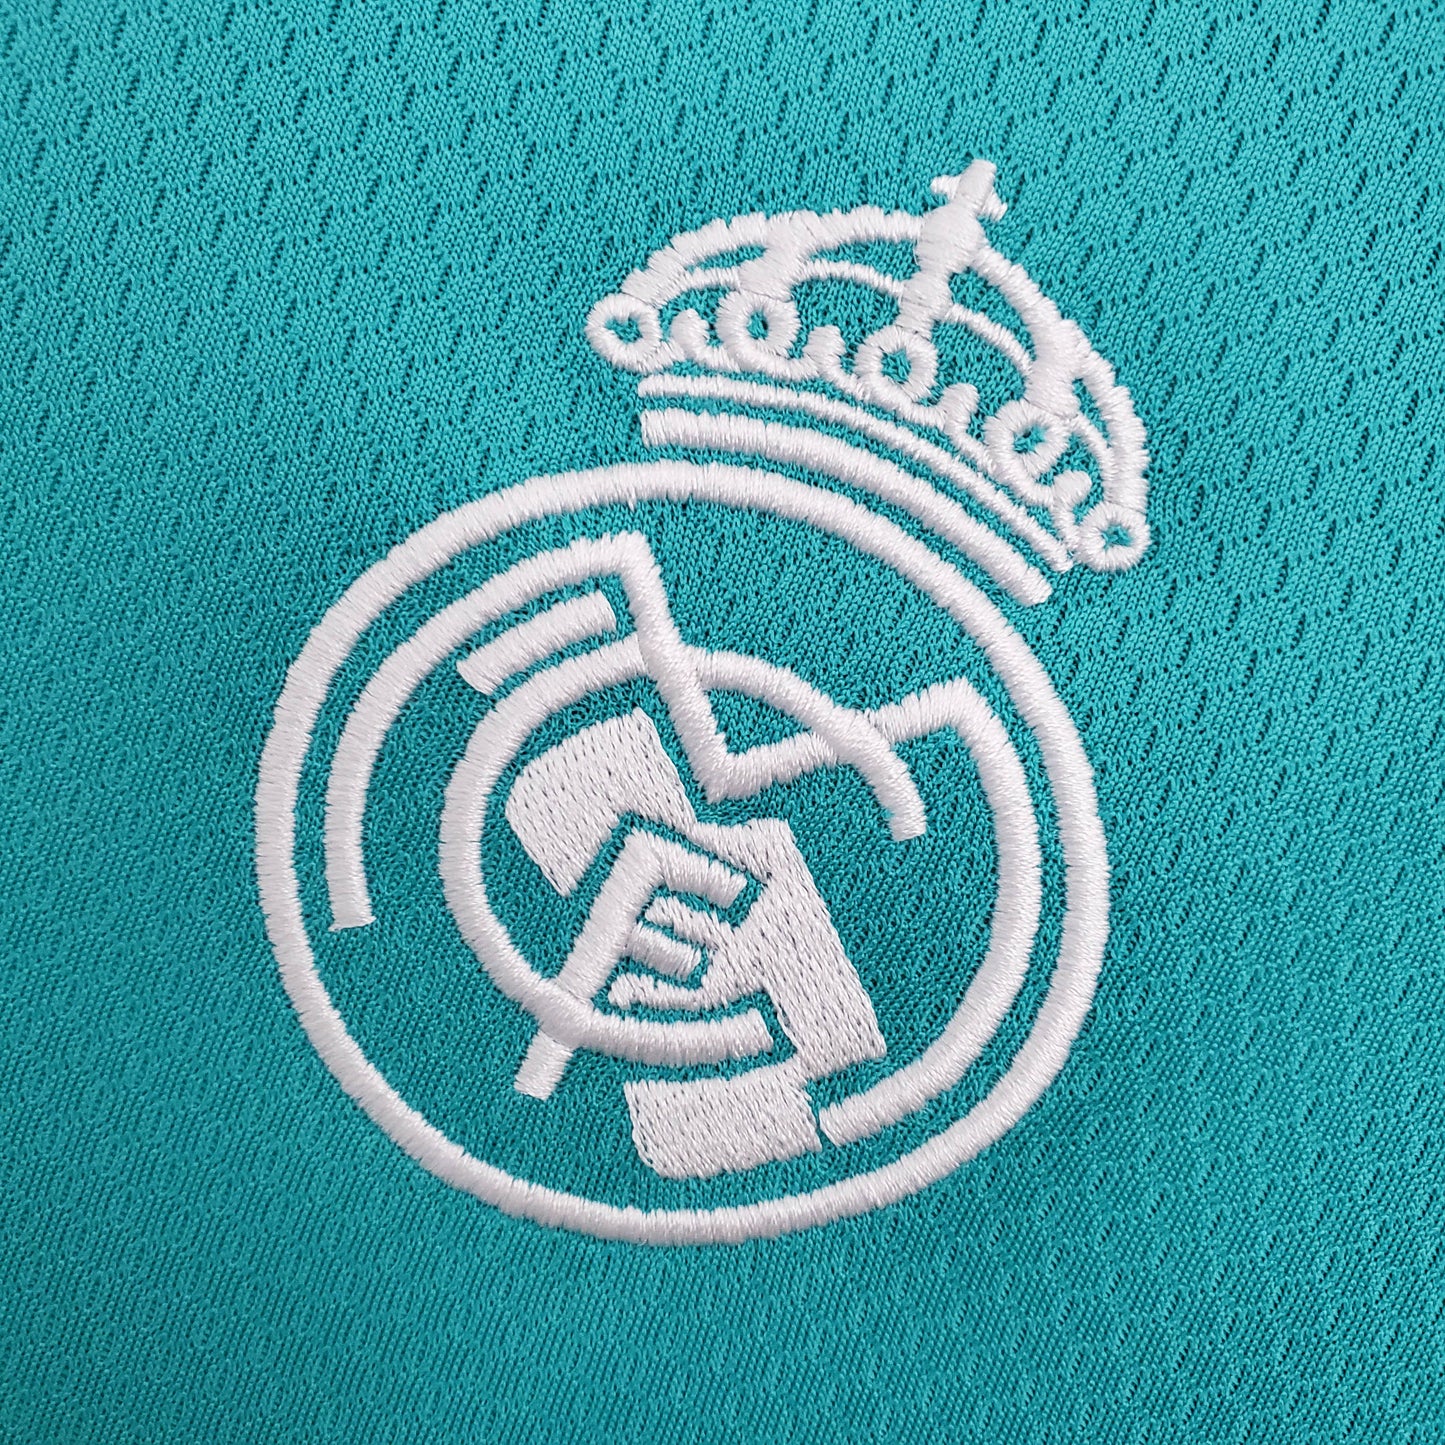 2021/2022 Real Madrid Training Wear Football Shirt Green